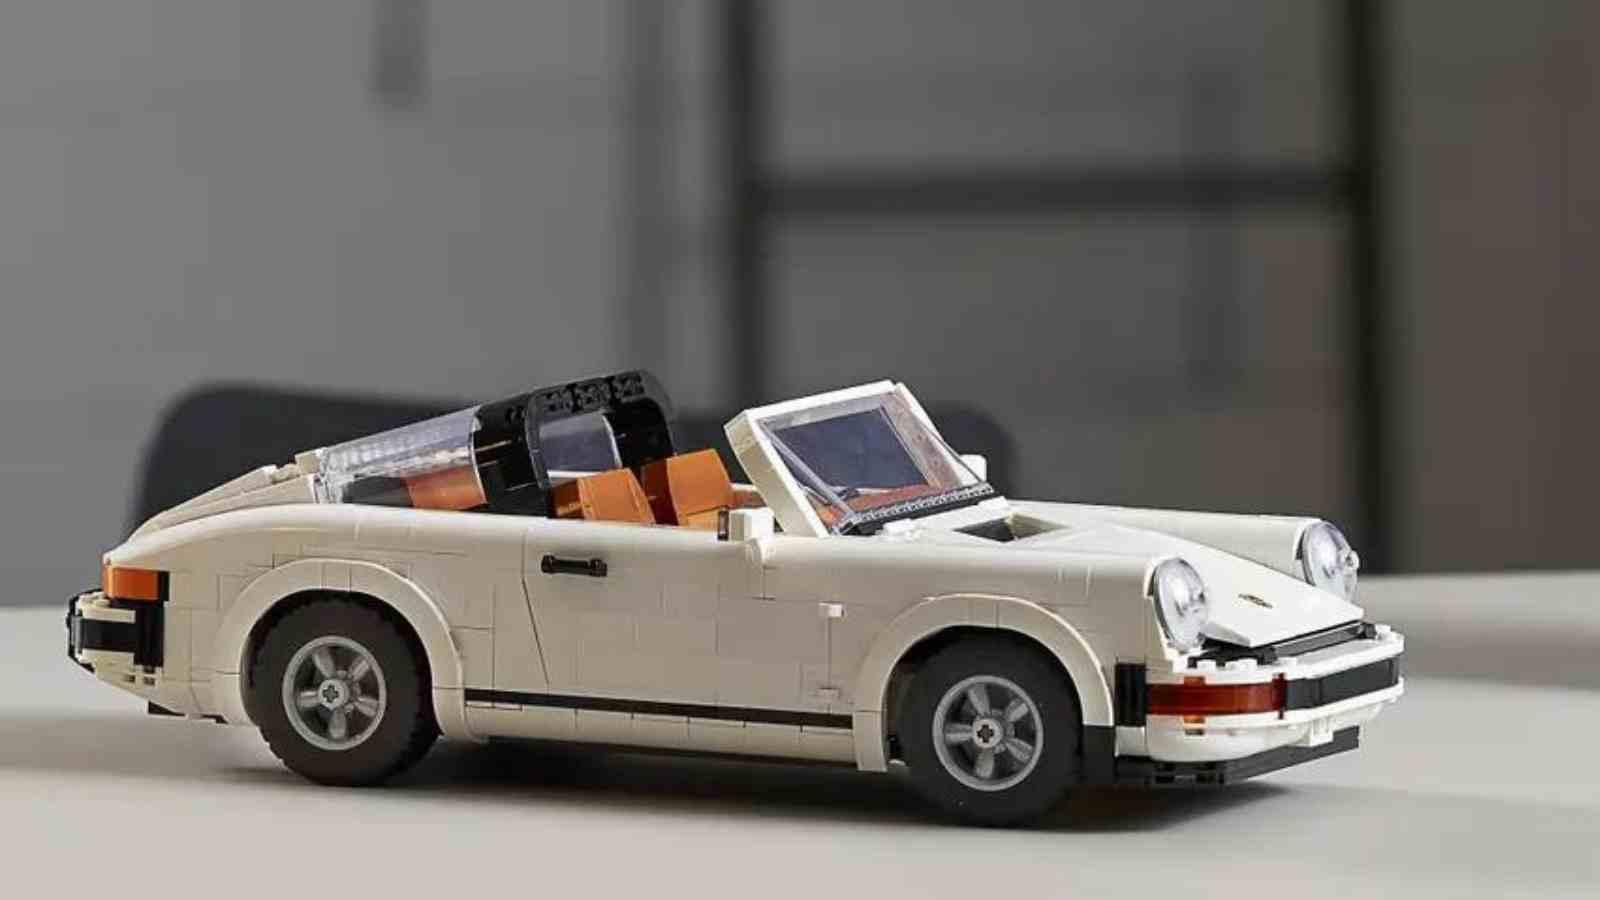 The LEGO Porsche 911 in Targa format